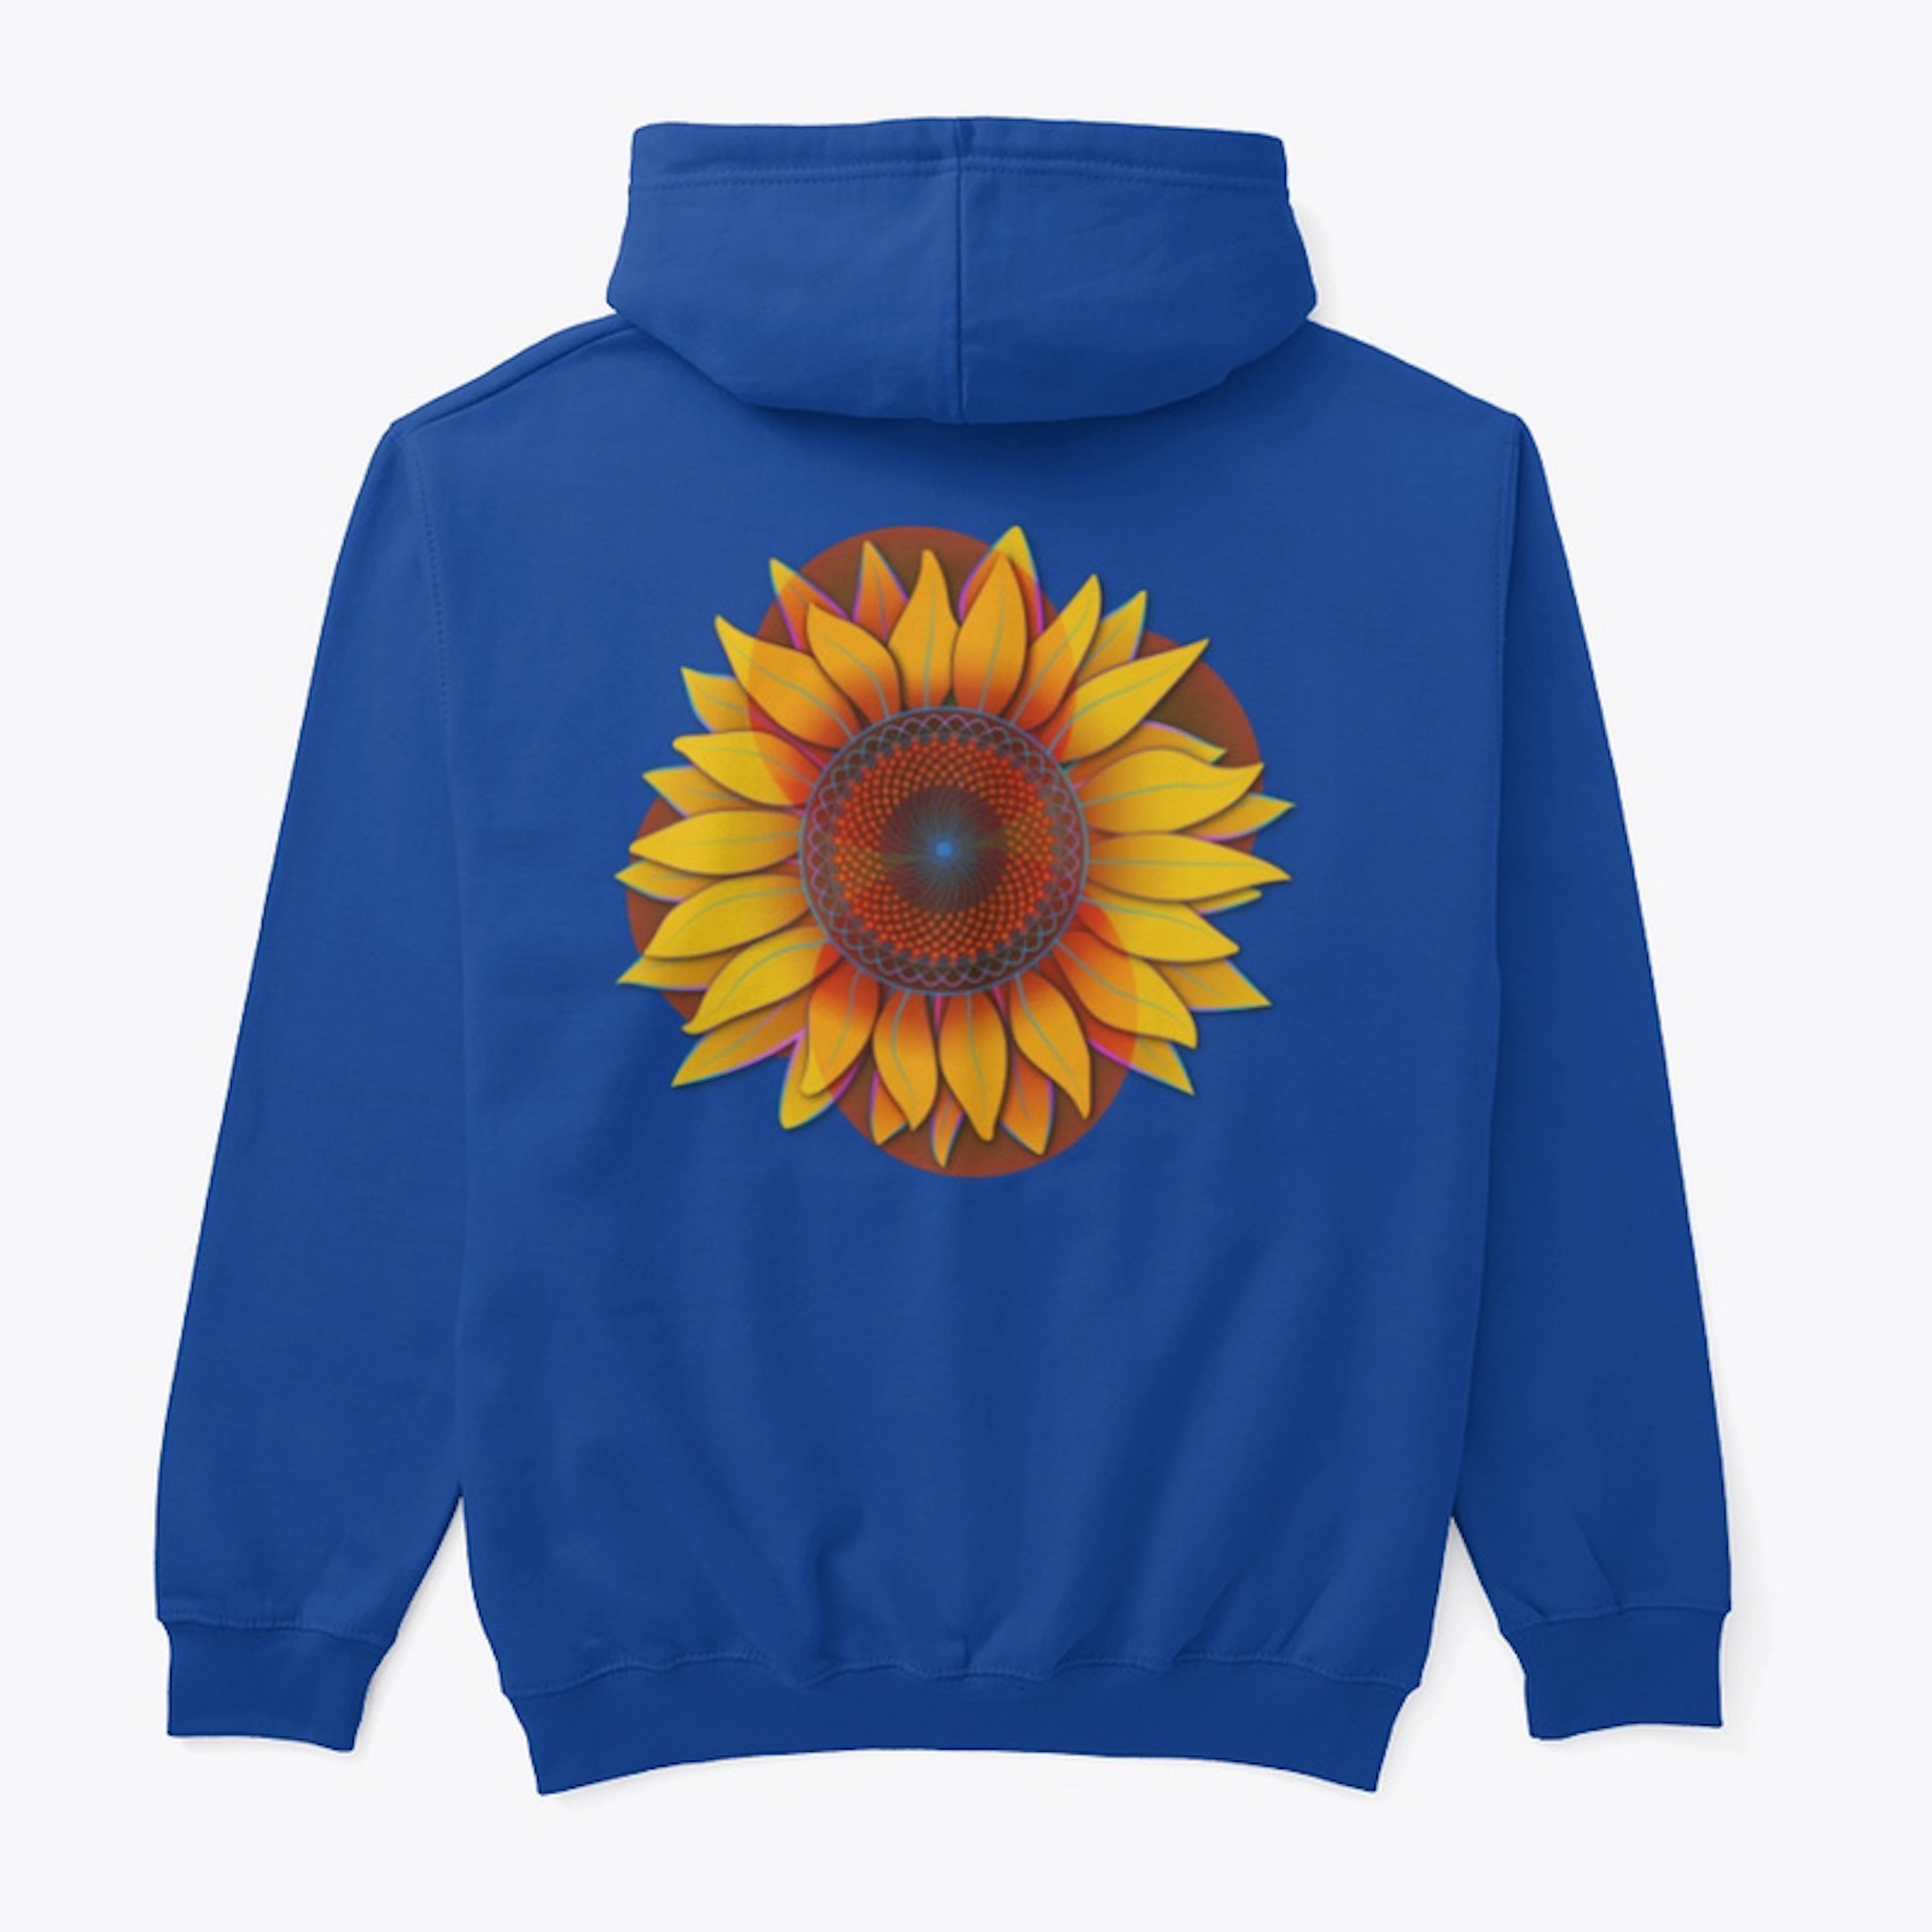 Sunflowers "Trippy Sunflower" Hoodie